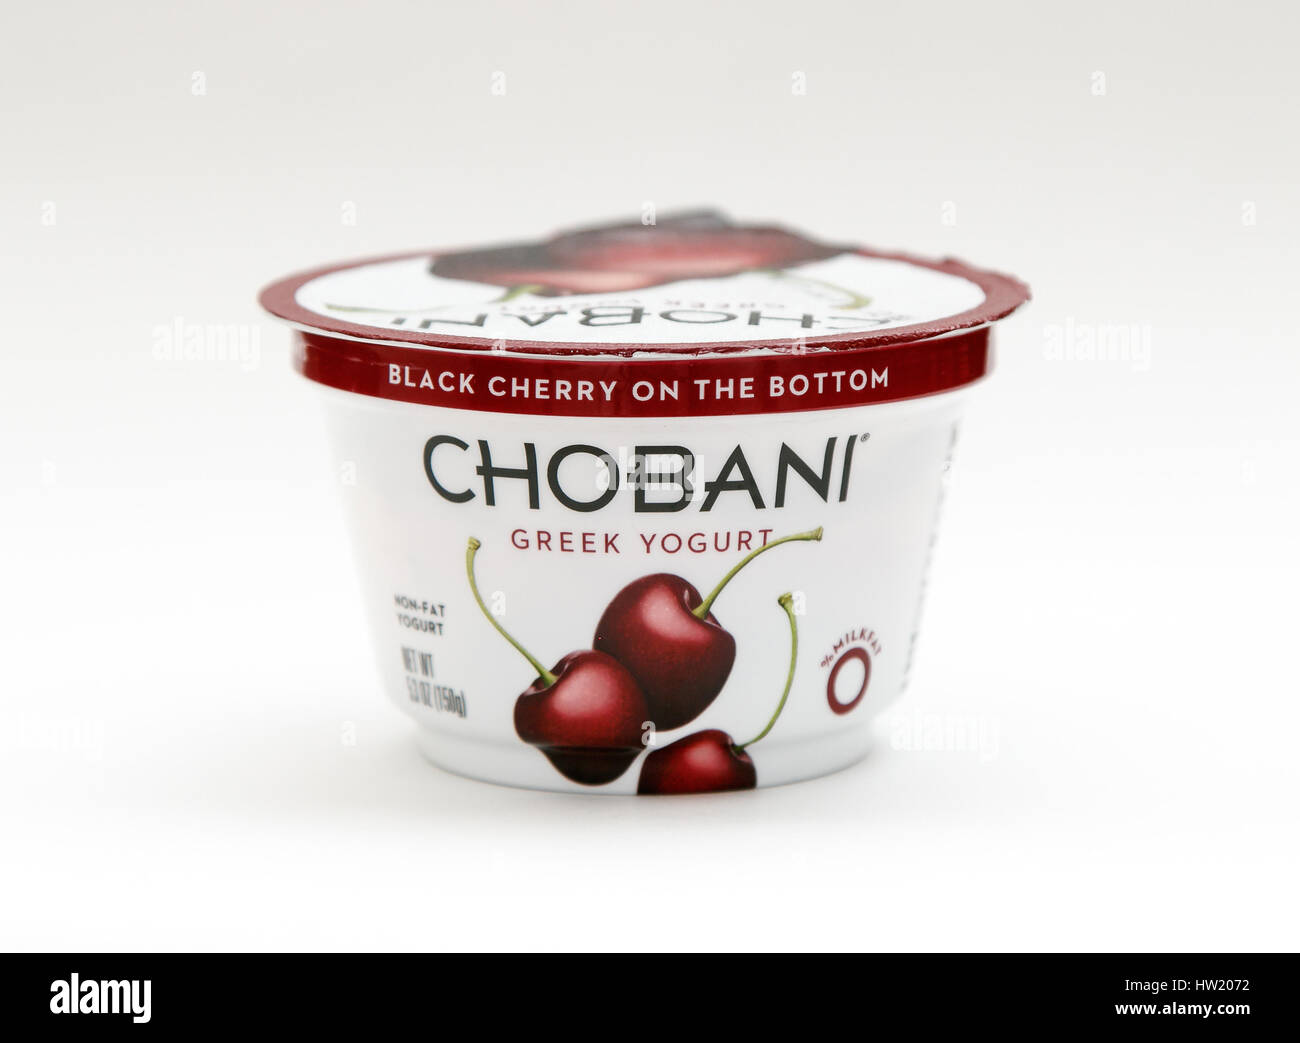 Container of cherry Chobani Greek yogurt stands against white background. Stock Photo